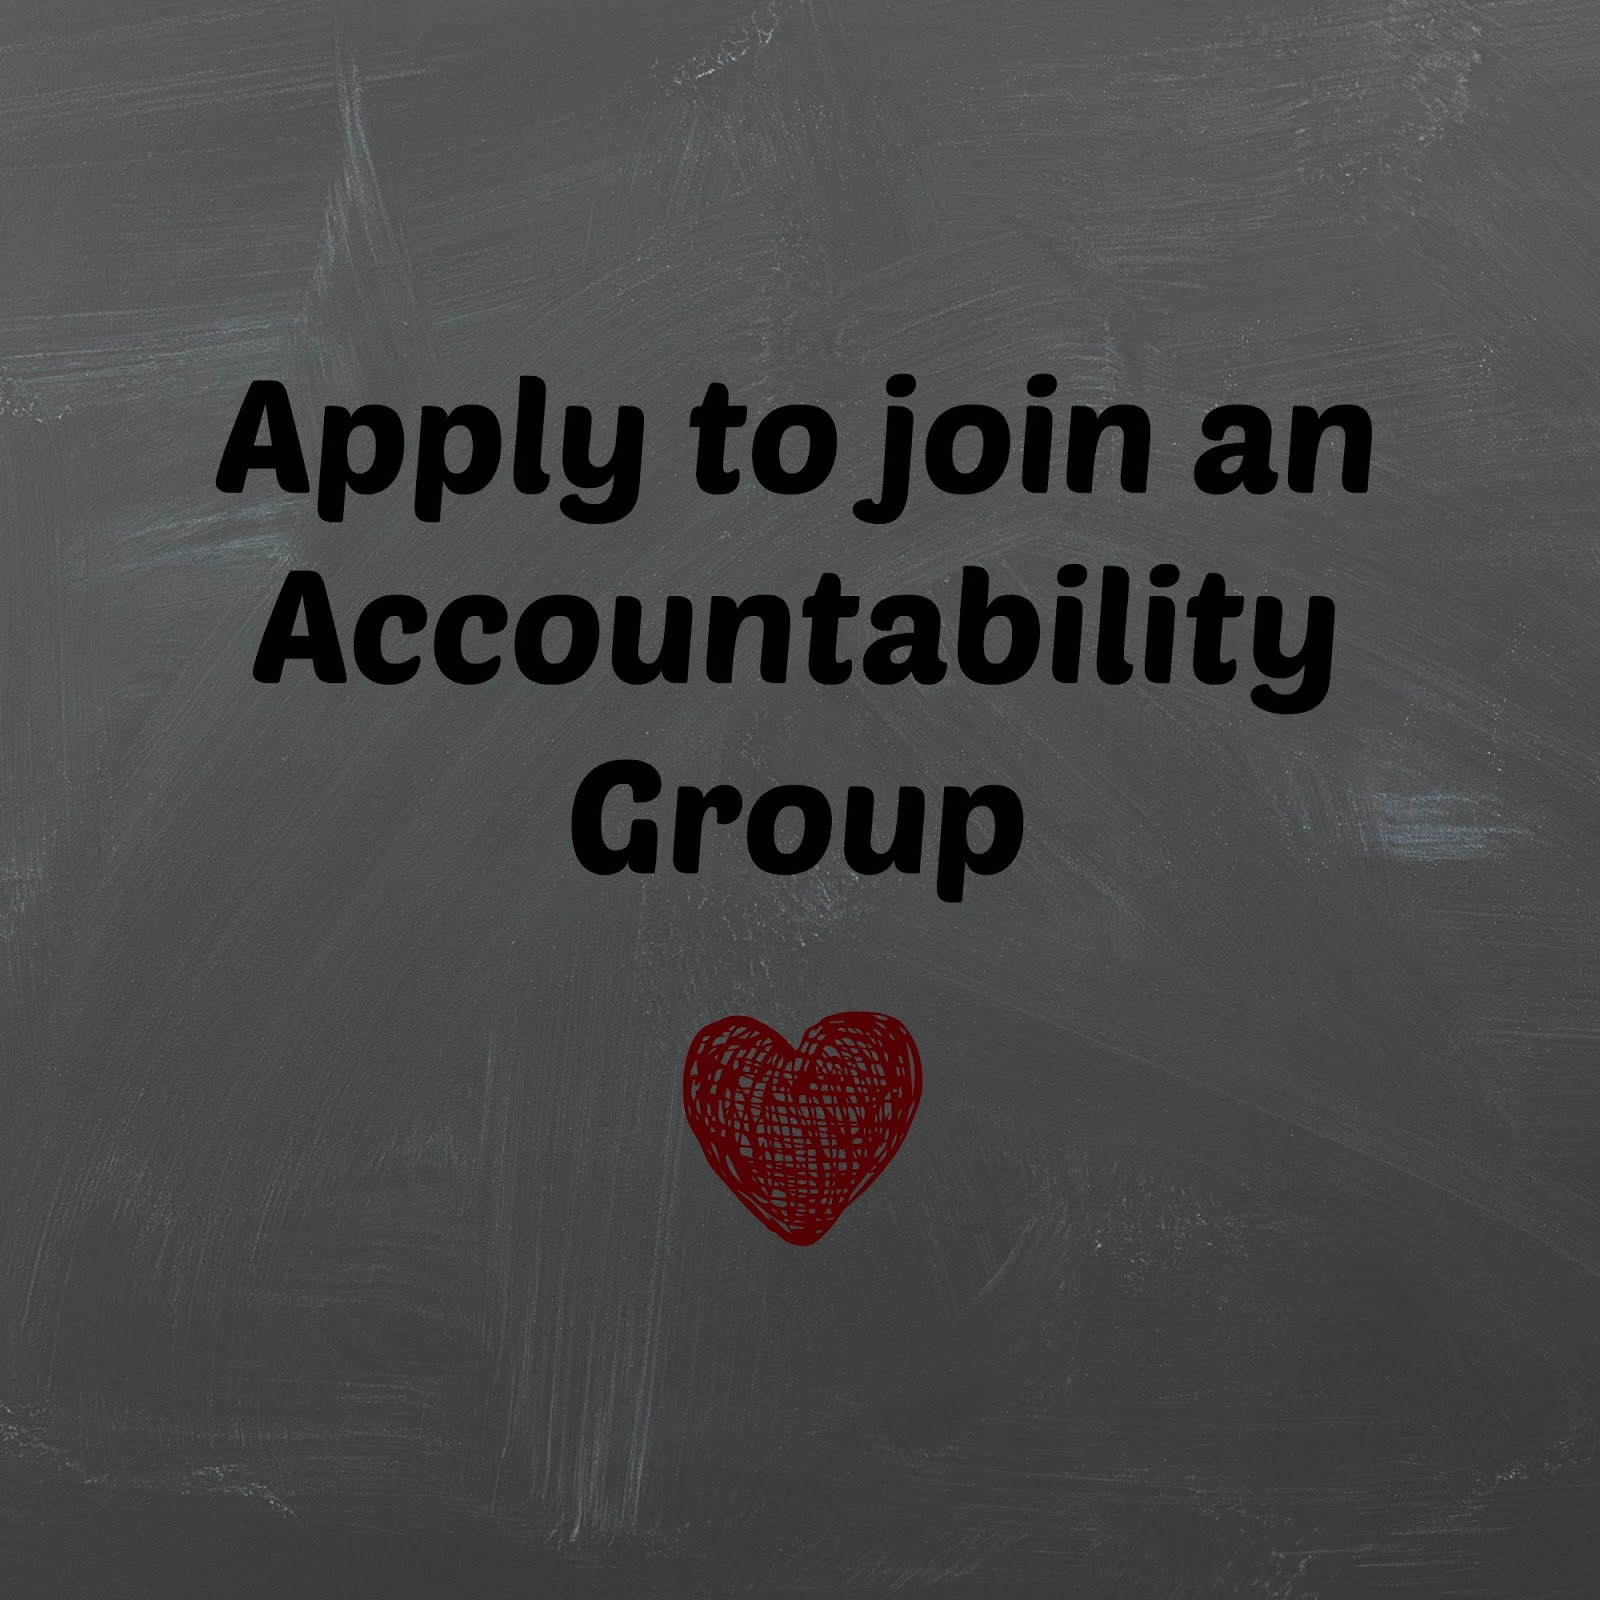 Accountability Group Application